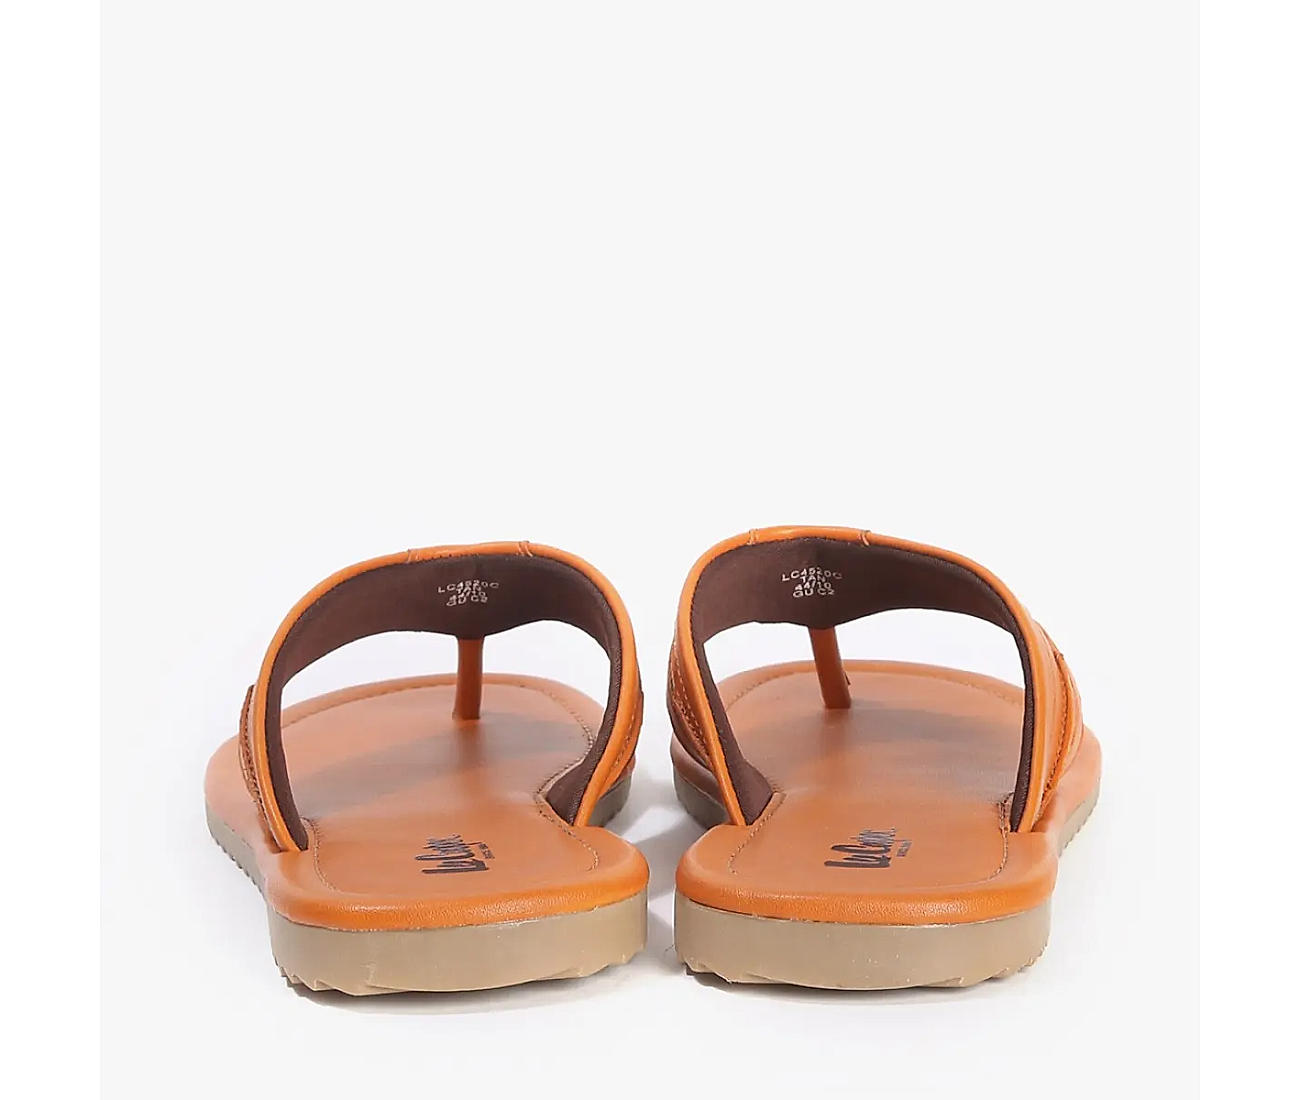 Buy Lee Cooper Black Sandals on Snapdeal | PaisaWapas.com